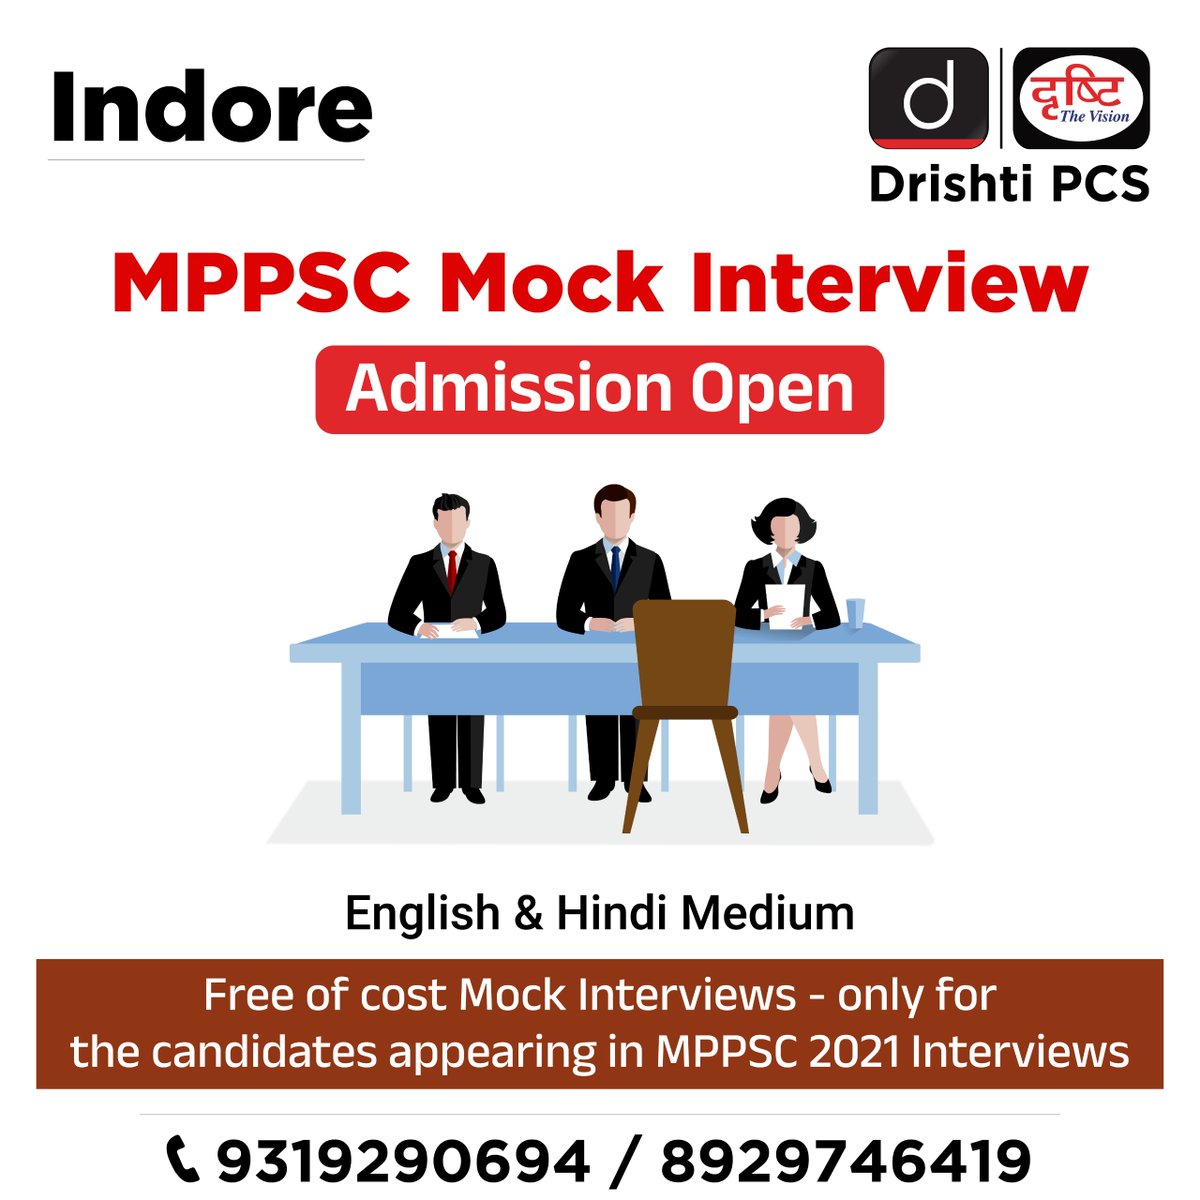 Attention MPPSC aspirants! Mock Interviews for MPPSC 2021 are being conducted by Drishti IAS. Enrol now and be prepared to be Ready. drishti.xyz/MPPSC-MockInte… #MPPSC #MP #MadhyaPradesh #InterviewGuidanceProgram #Interview #UPSCPreparation #PCS #CSE #MPSCMockInterview #DrishtiIAS